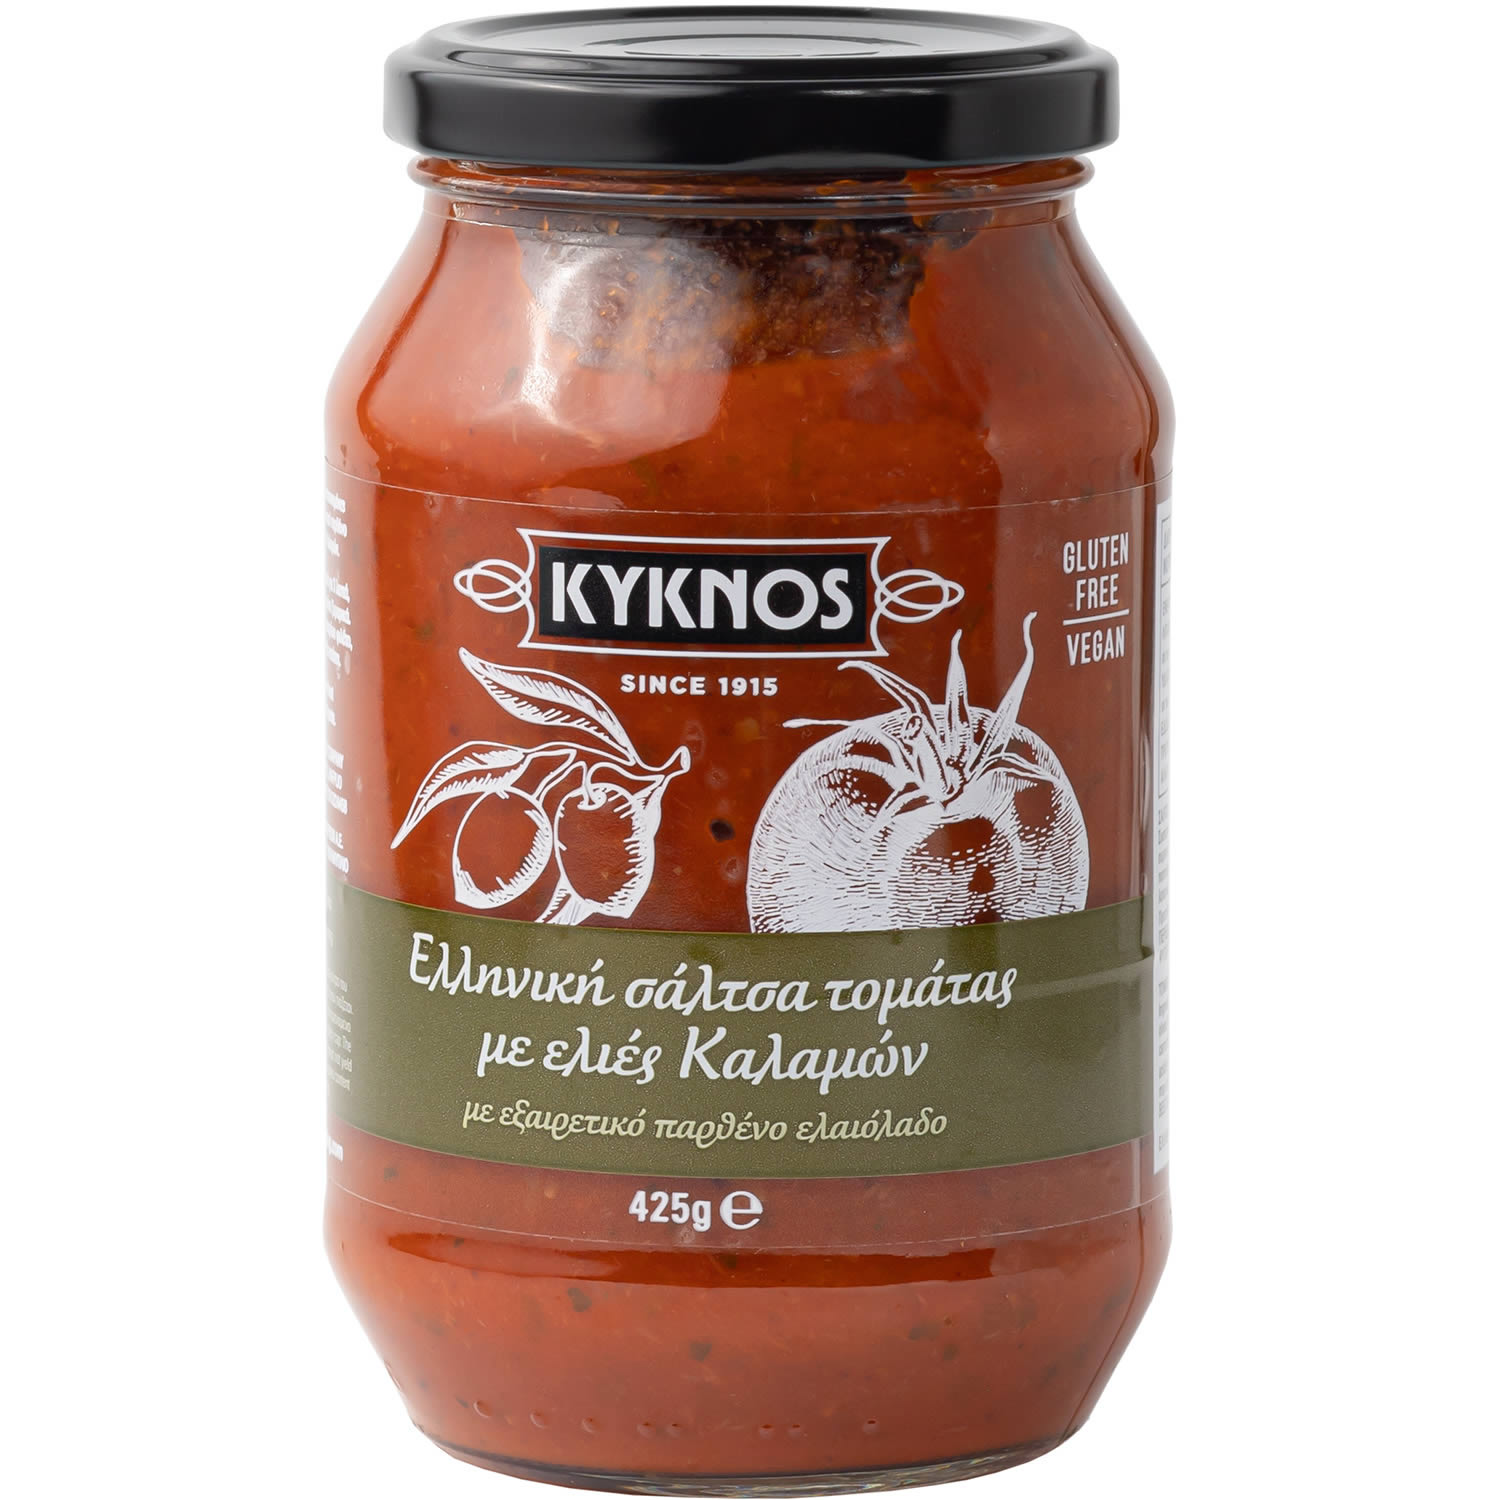 Kyknos - Tomatensoße mit Kalamata Oliven 425 g